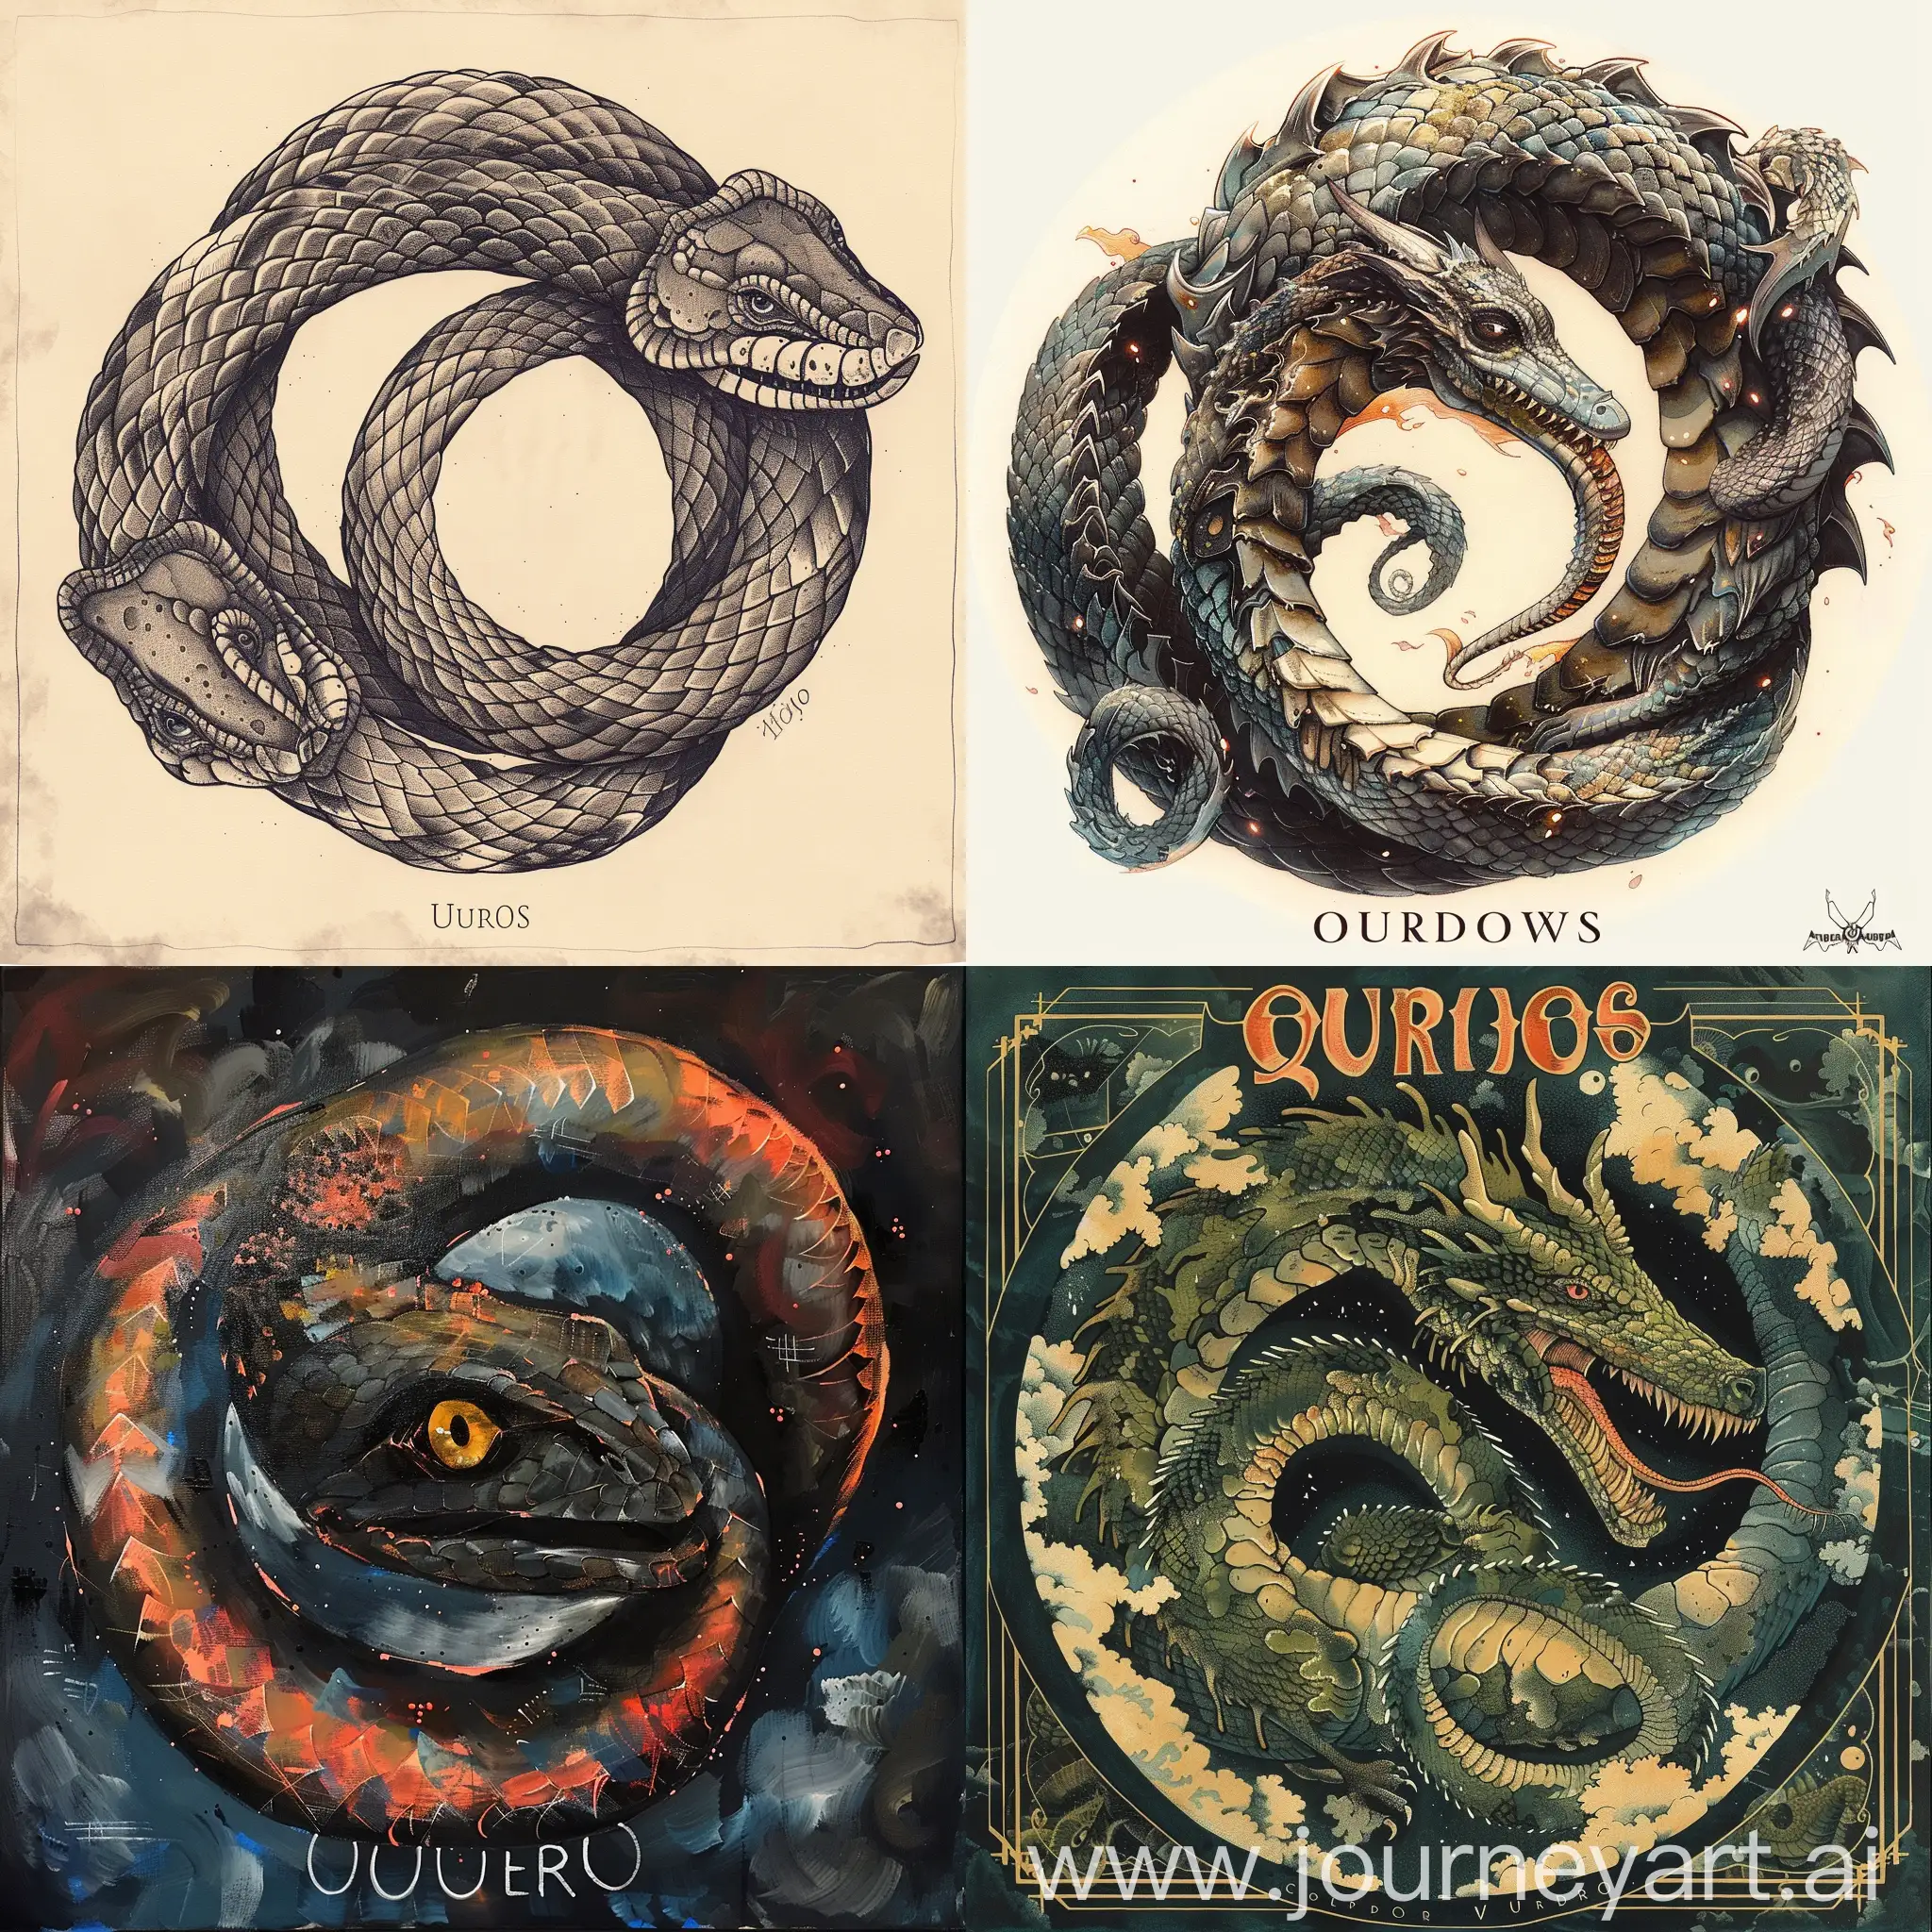 Ouroboros-Art-Abstract-Circular-Serpent-Symbol-in-Vibrant-Colors